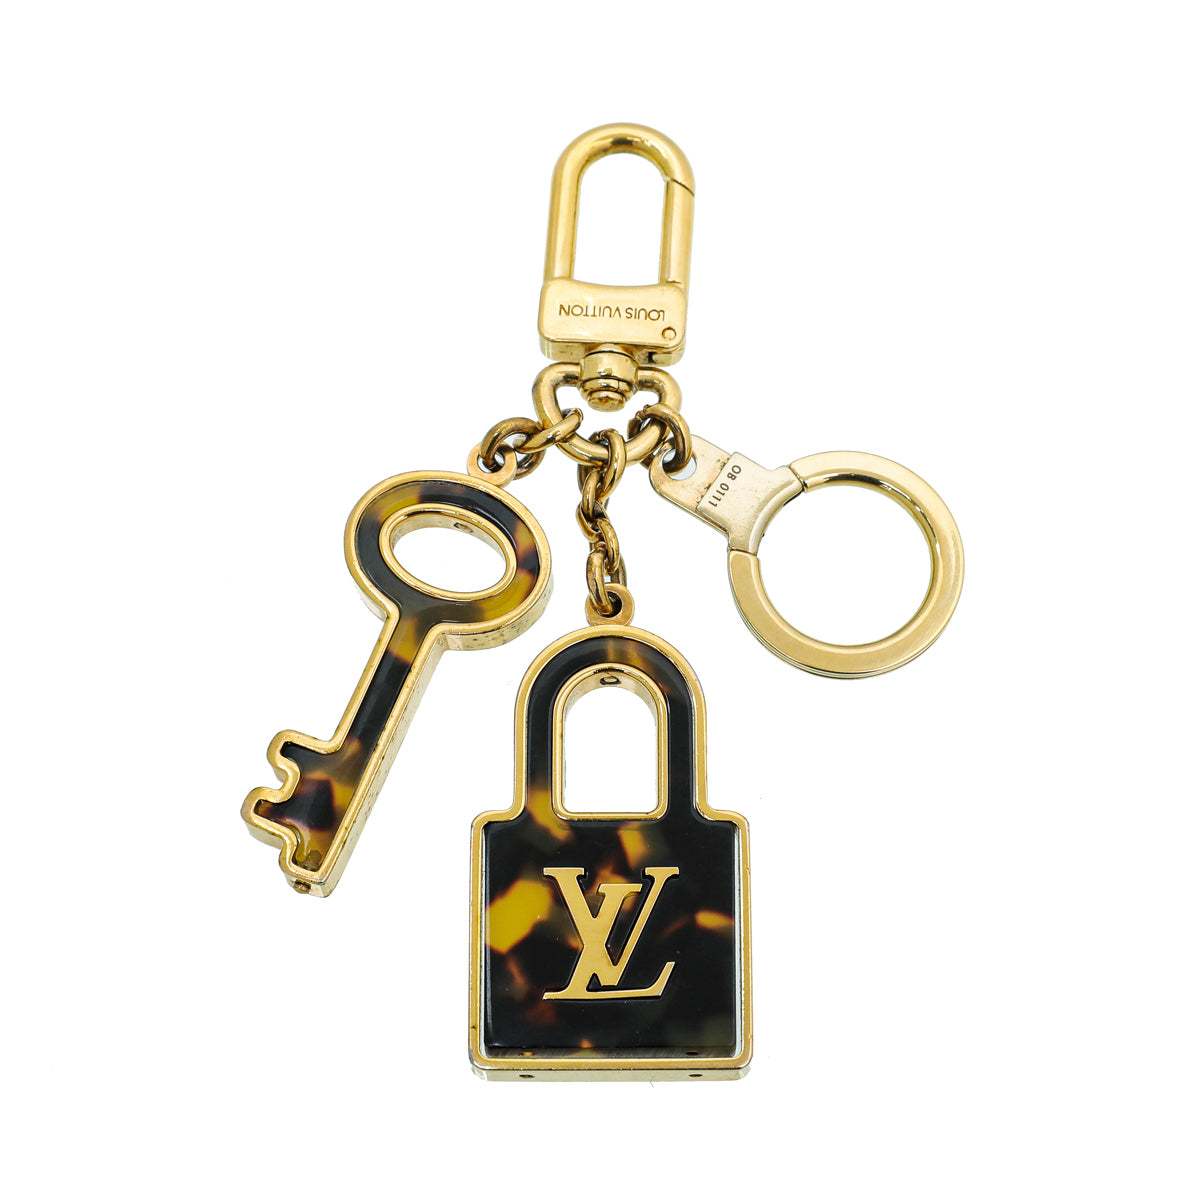 Louis Vuitton Burgundy / Gold Key and Lock Keyholder / Bag Charm